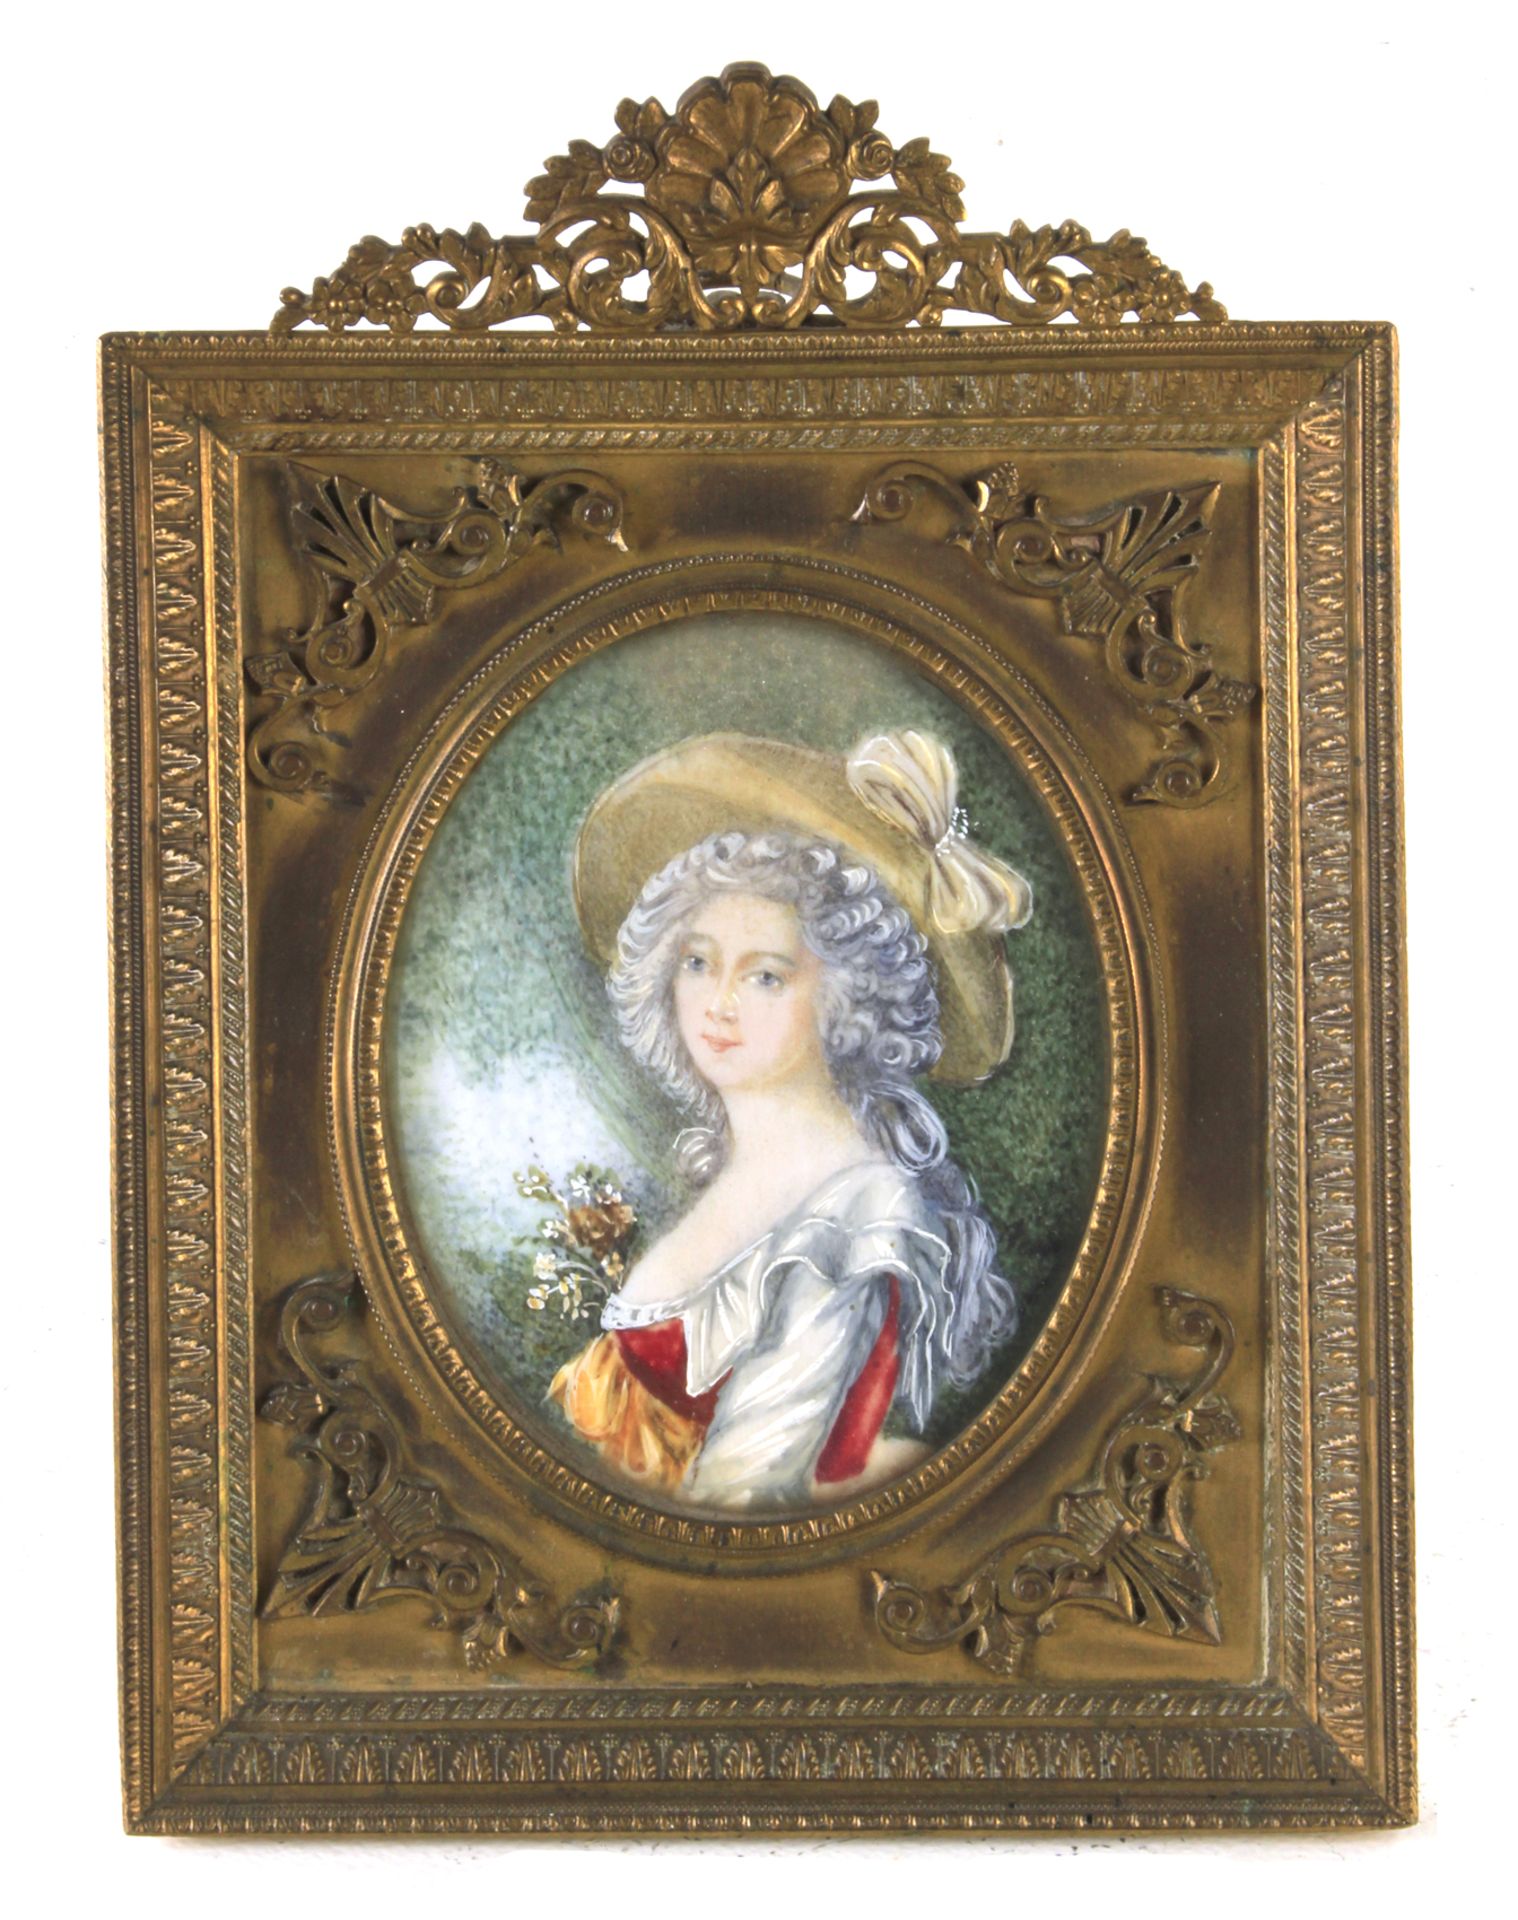 A 19th century French portrait miniature